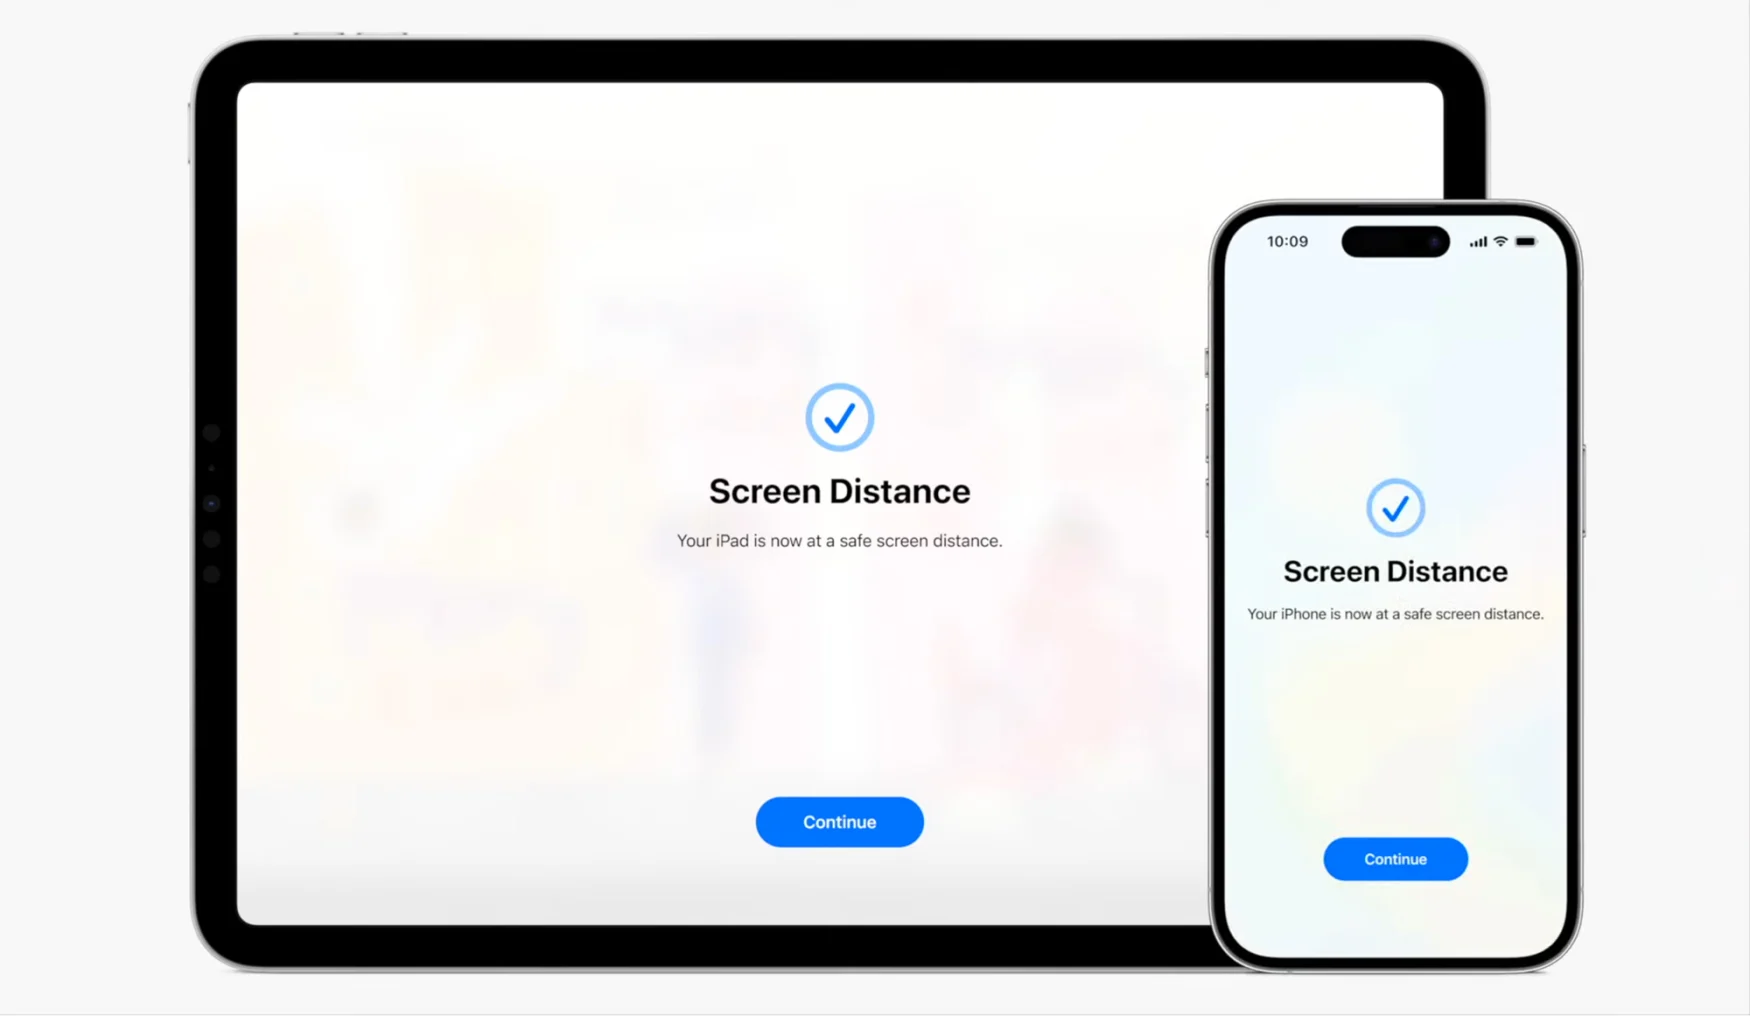 Pengaturan jarak layar Apple akan memberi tahu pengguna jika mereka cukup jauh dari layar untuk mengurangi kemungkinan kerusakan penglihatan. 